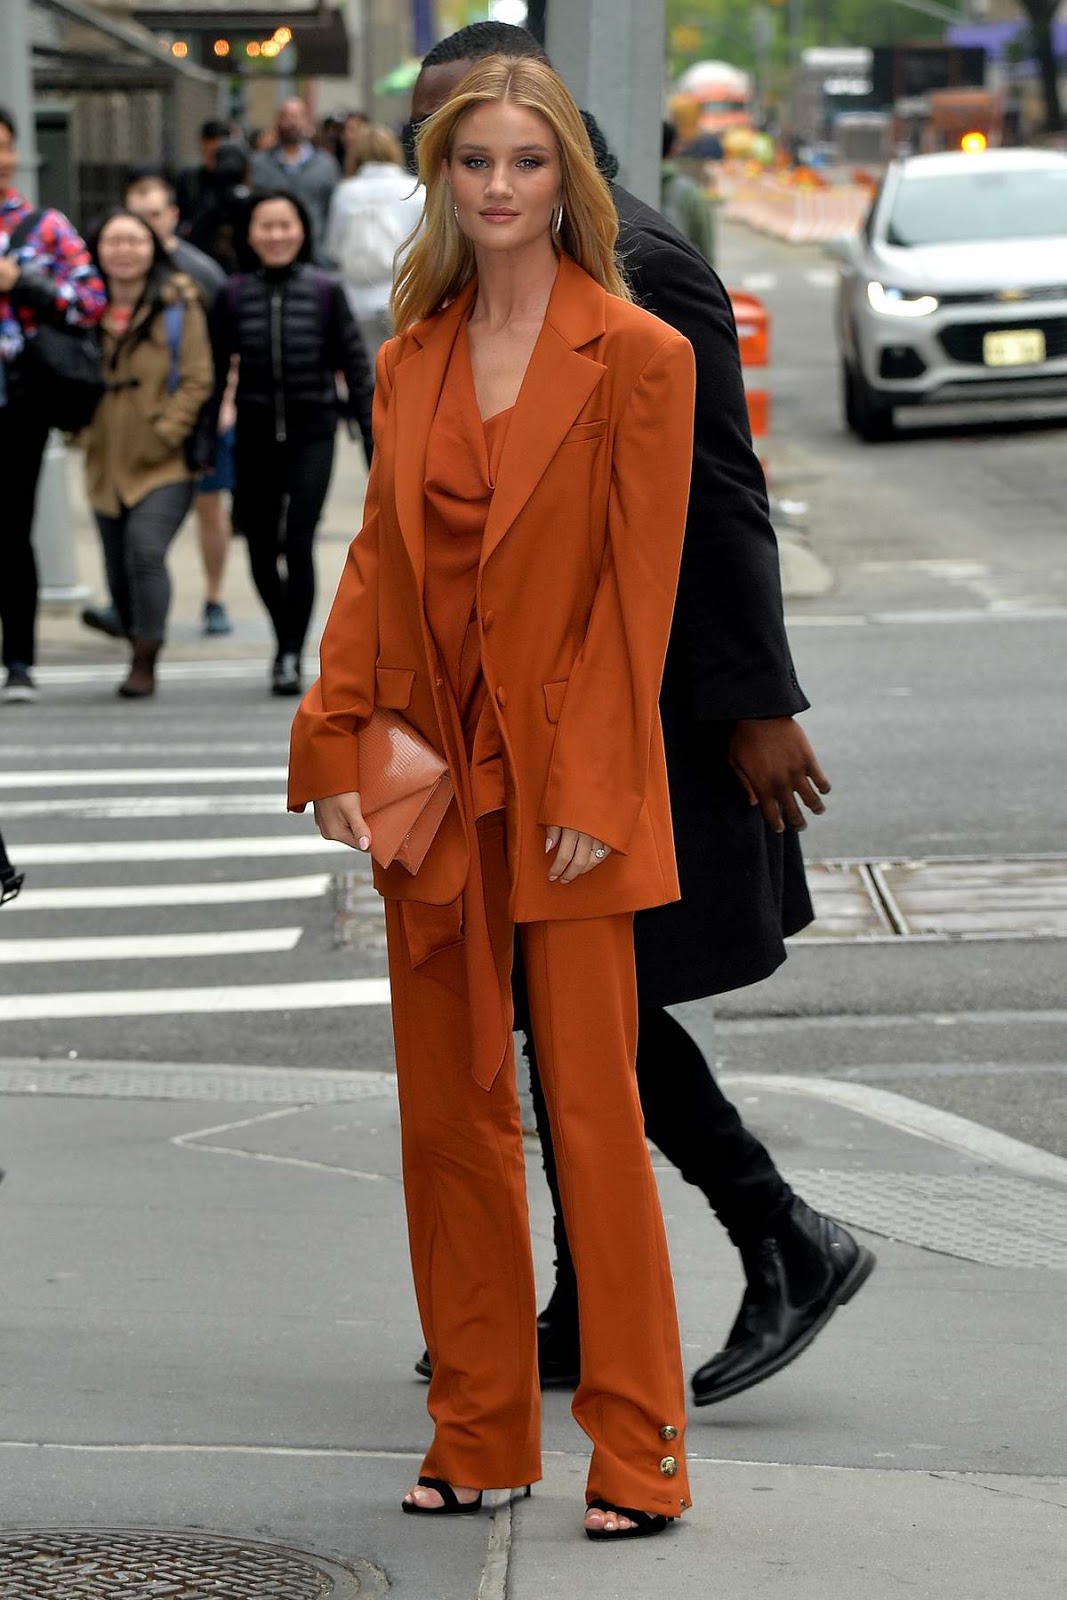 Rosie Huntington-Whiteley – Celebrity Street Style Fashion in New York City